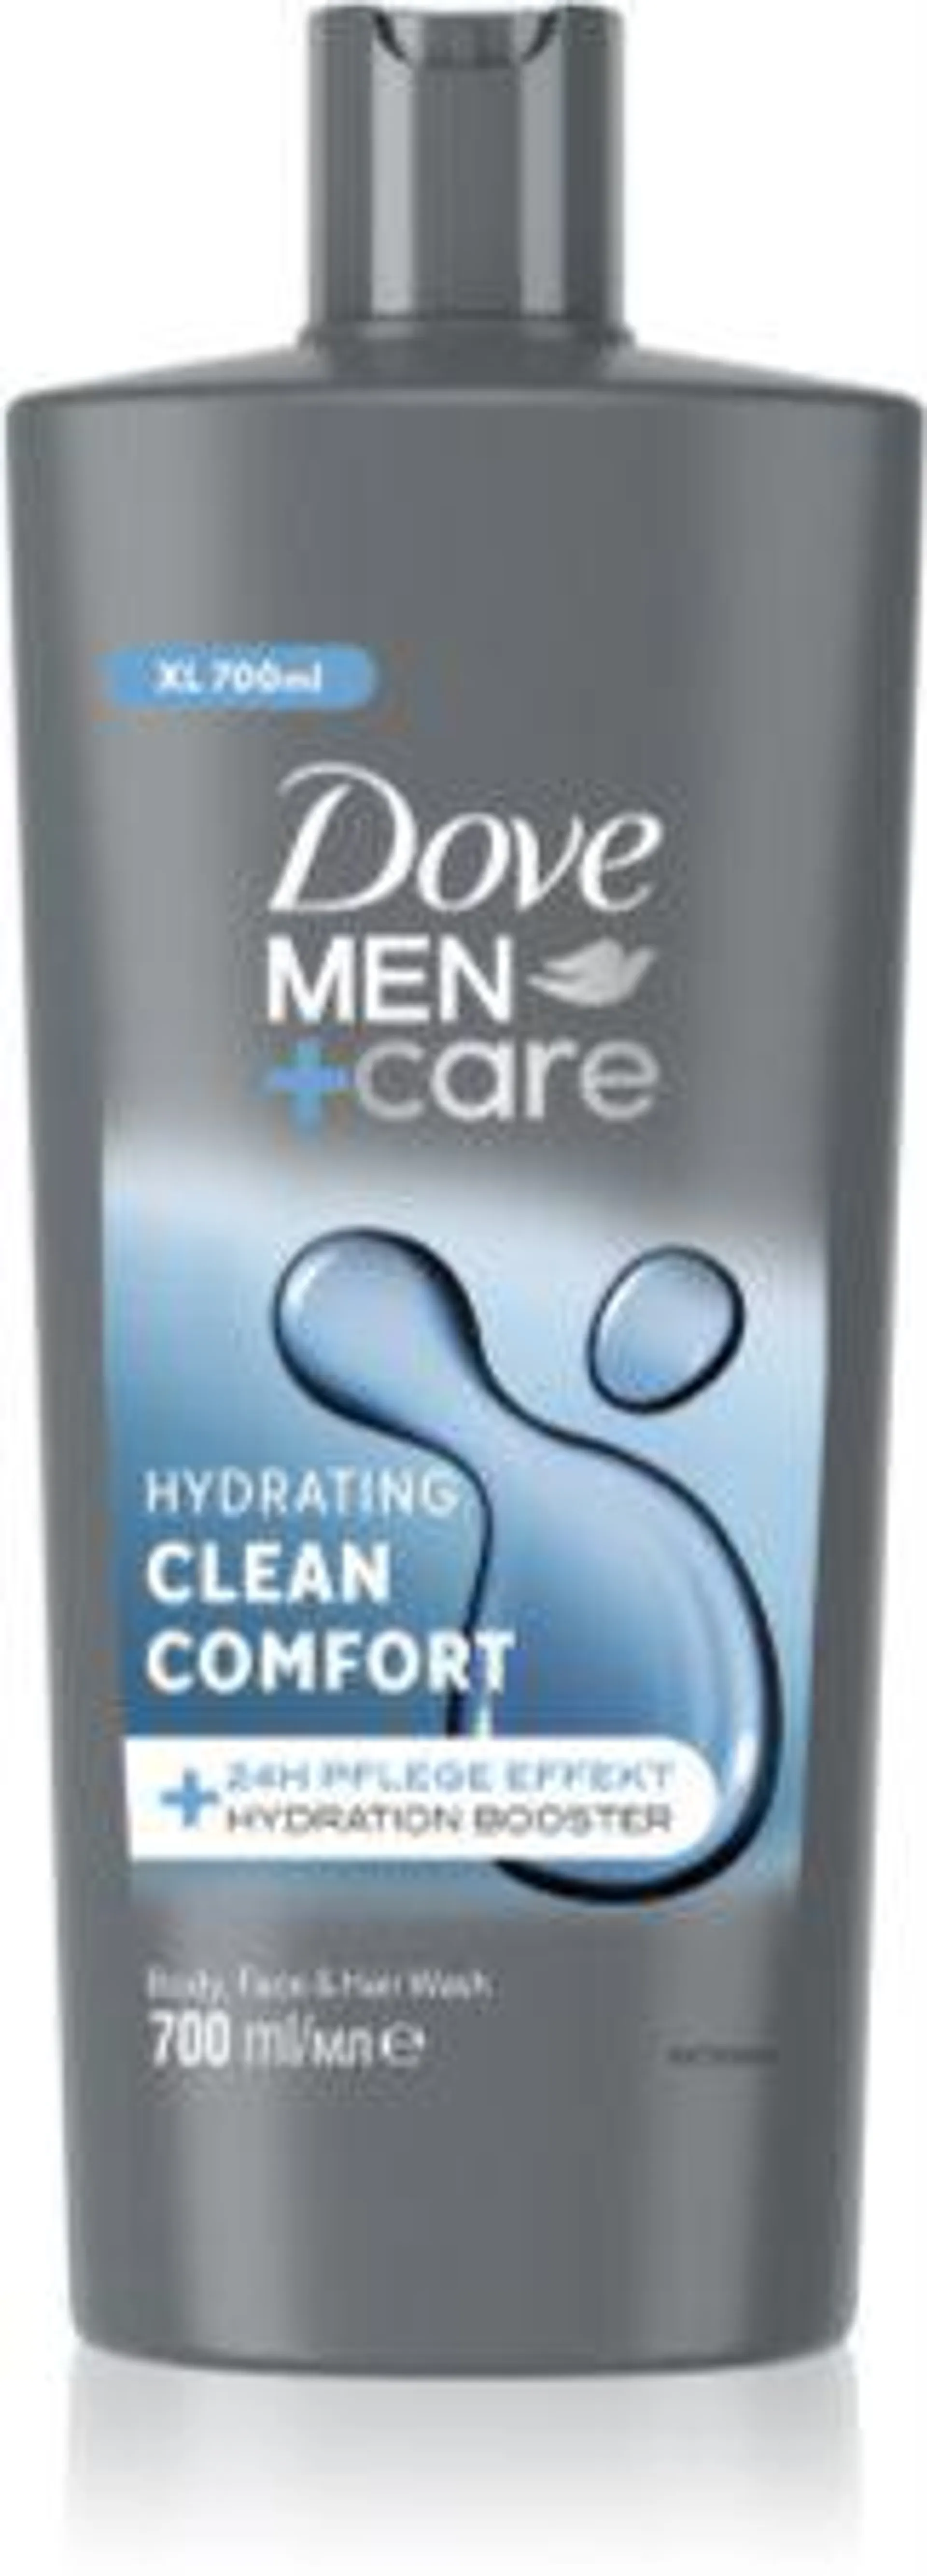 Men+Care Clean Comfort